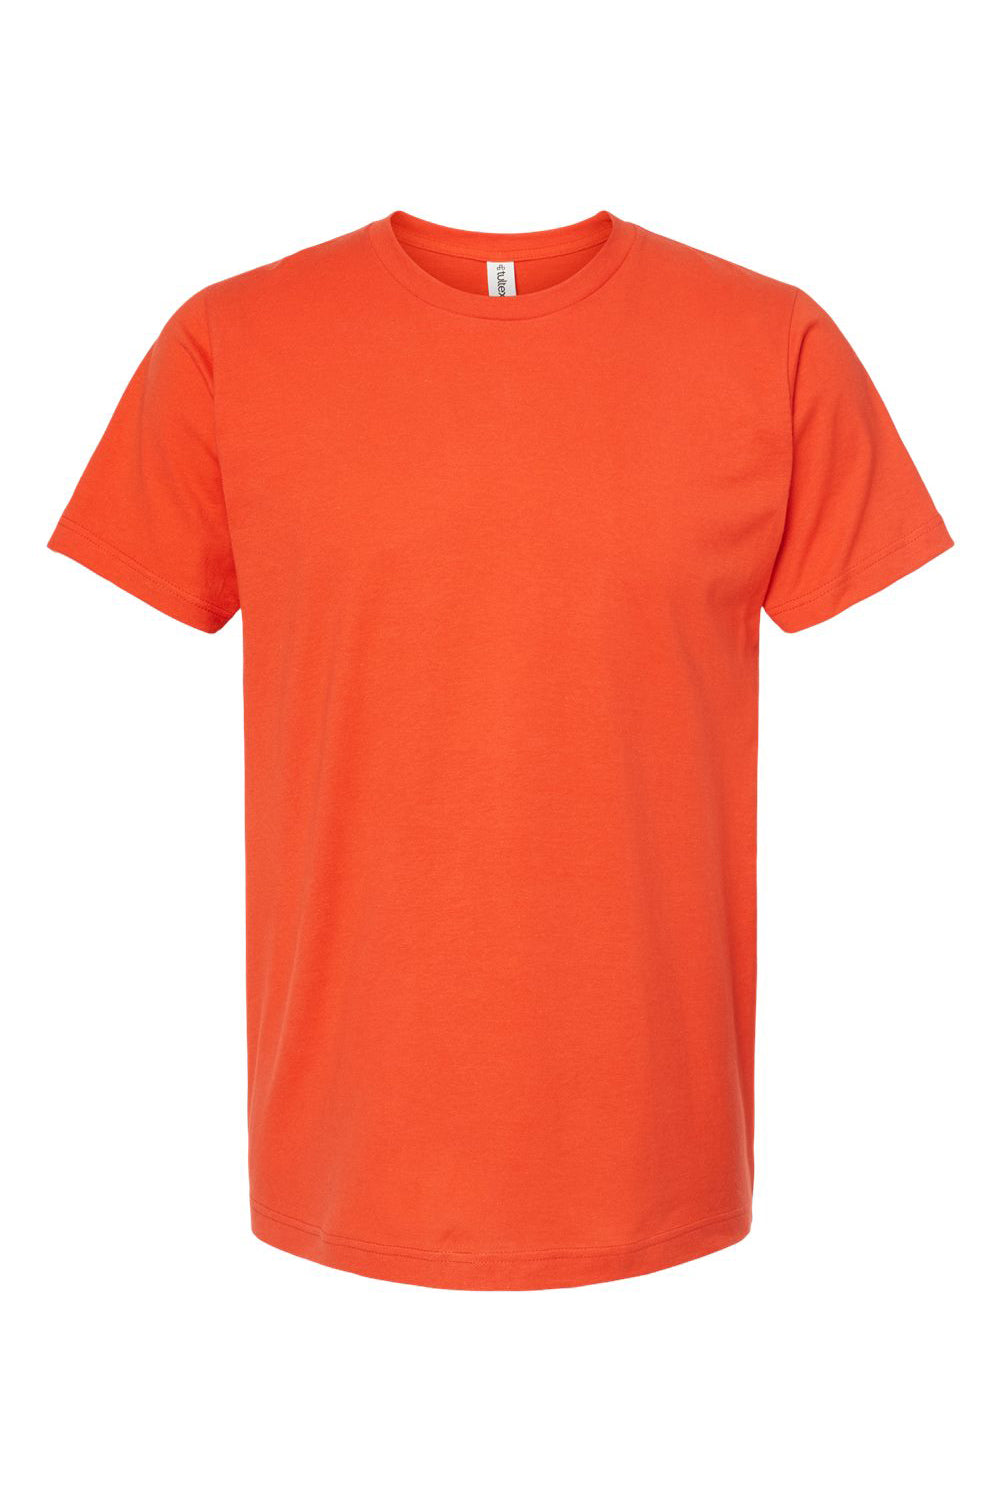 Tultex 202 Mens Fine Jersey Short Sleeve Crewneck T-Shirt Orange Flat Front